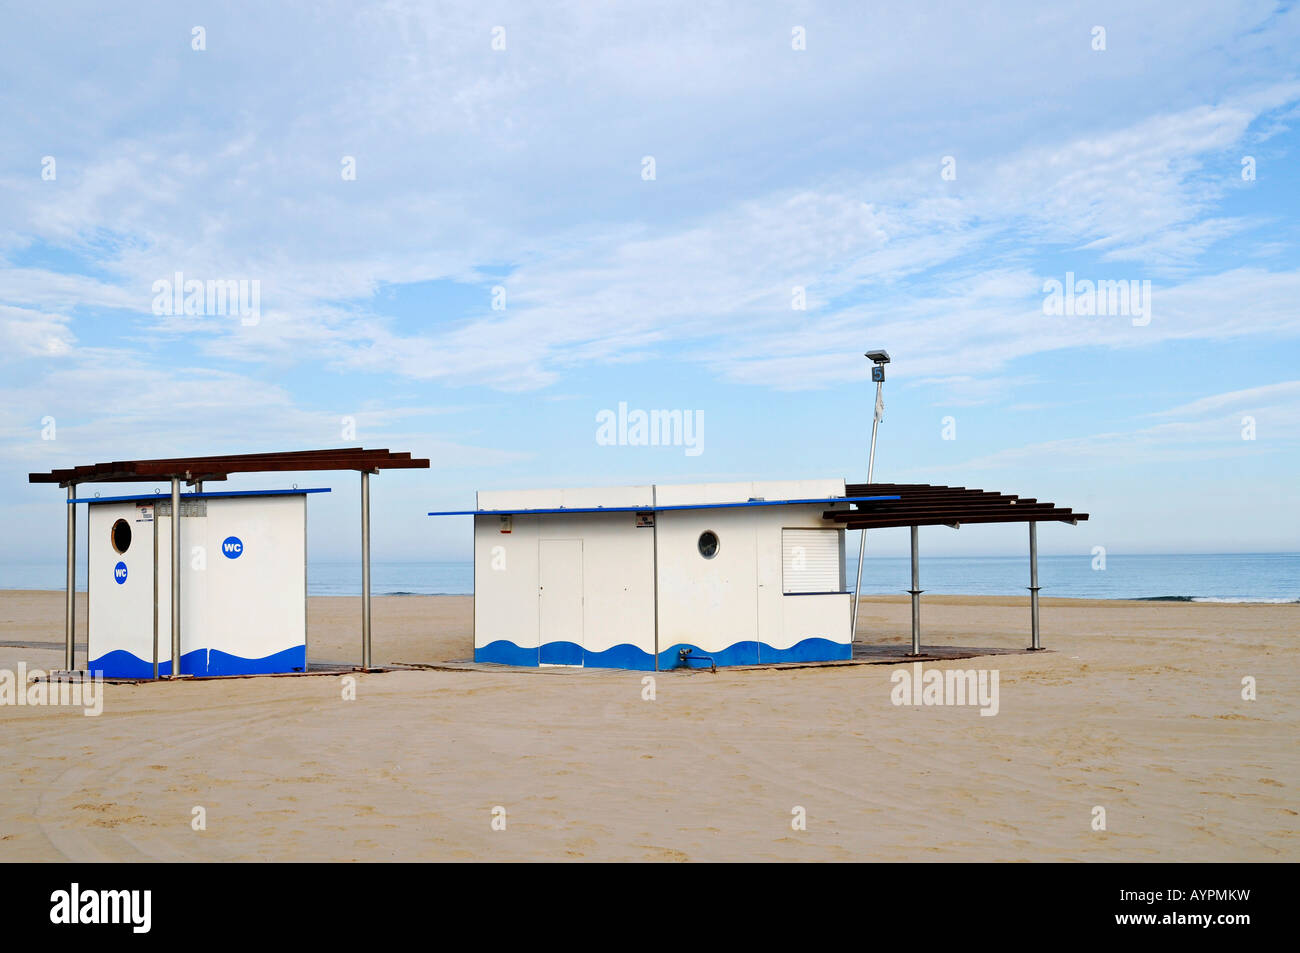 Toilets and restaurant on an empty beach, Gandia, Costa Blanca, Valencia Province, Spain Stock Photo